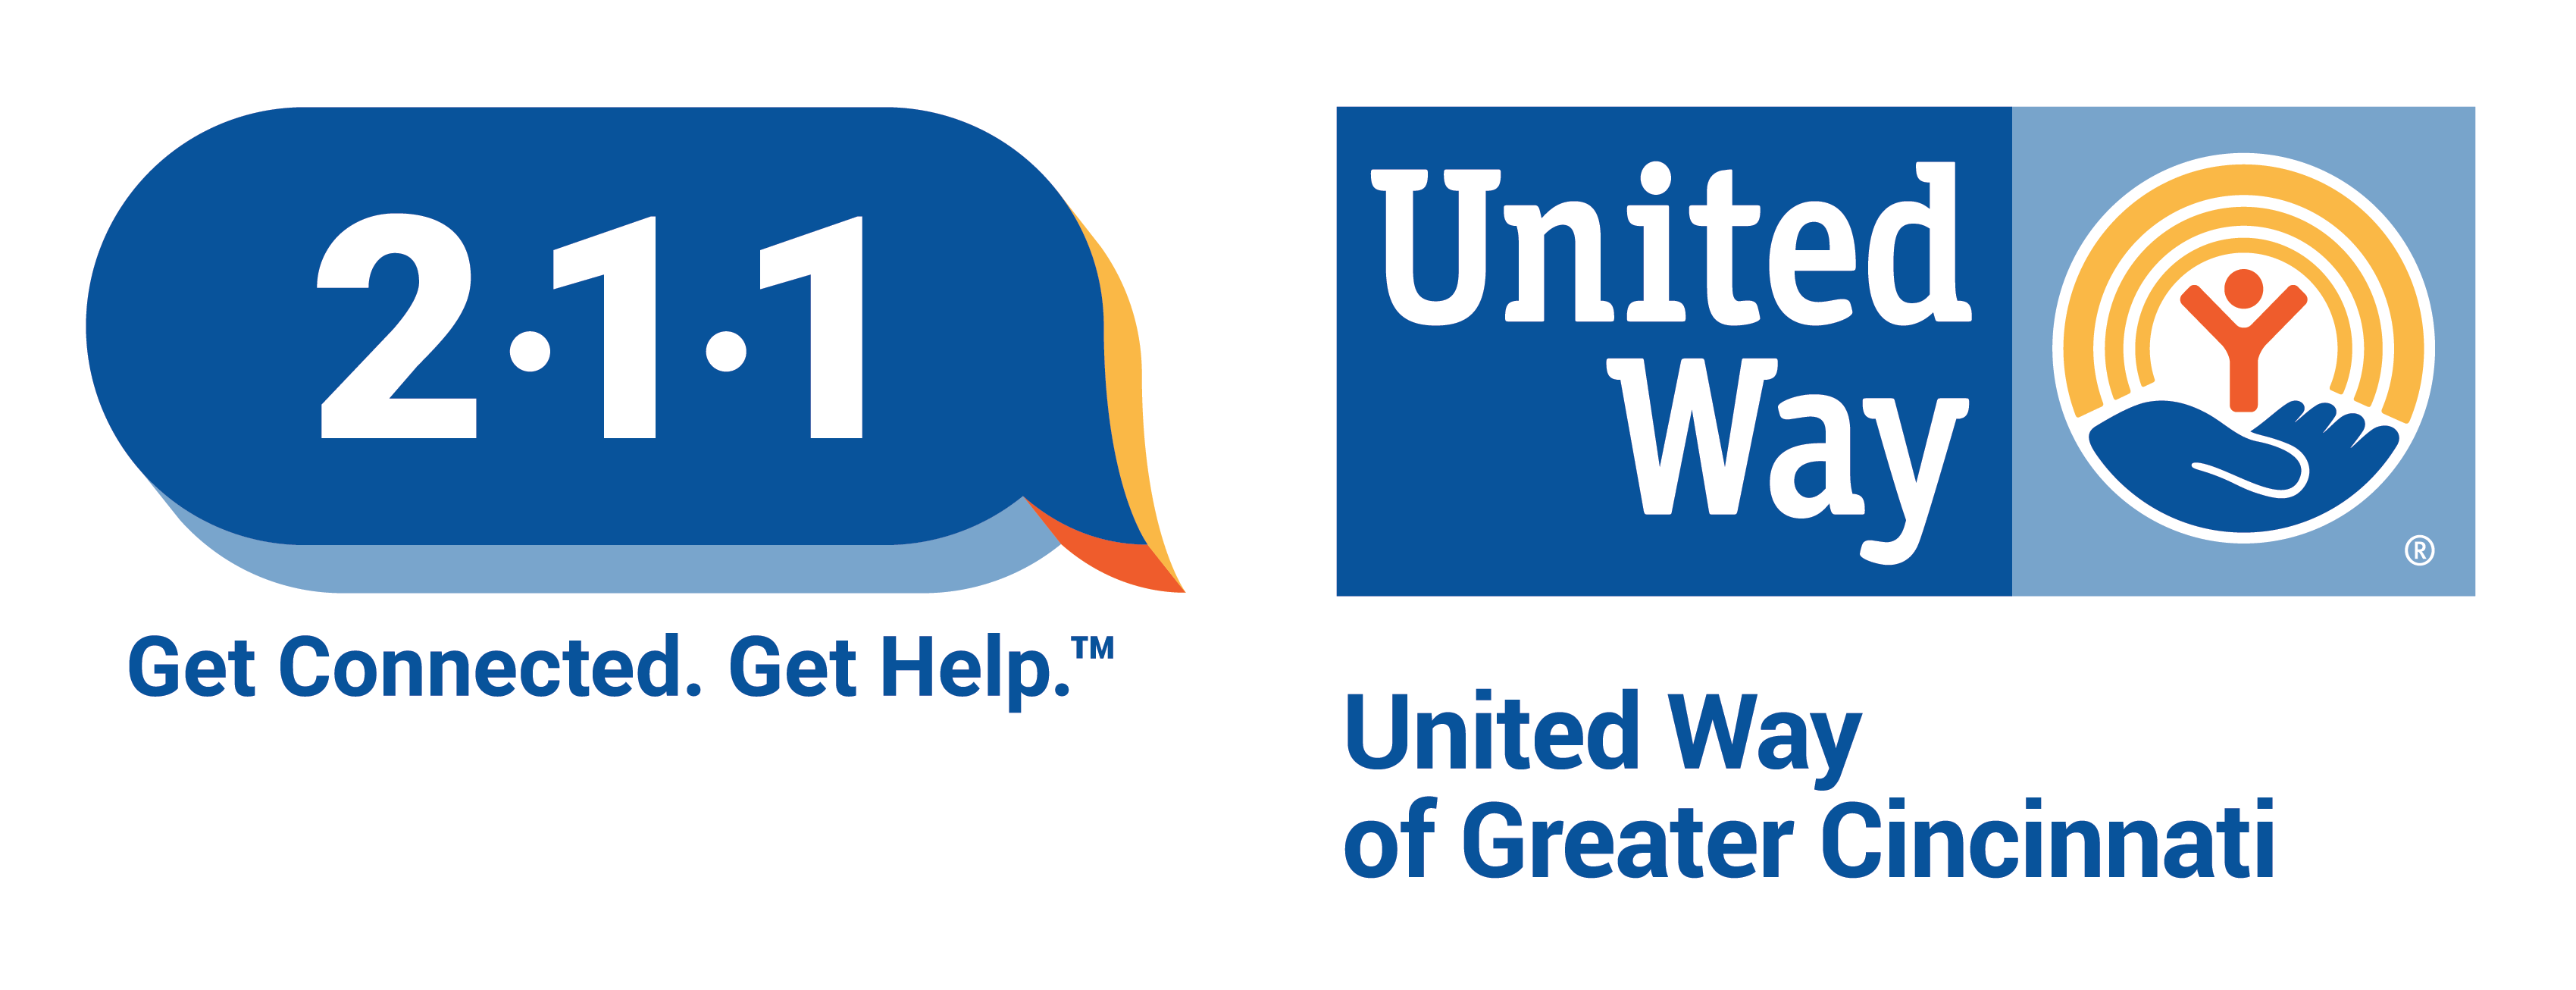 United Way of Greater Cincinnati/211